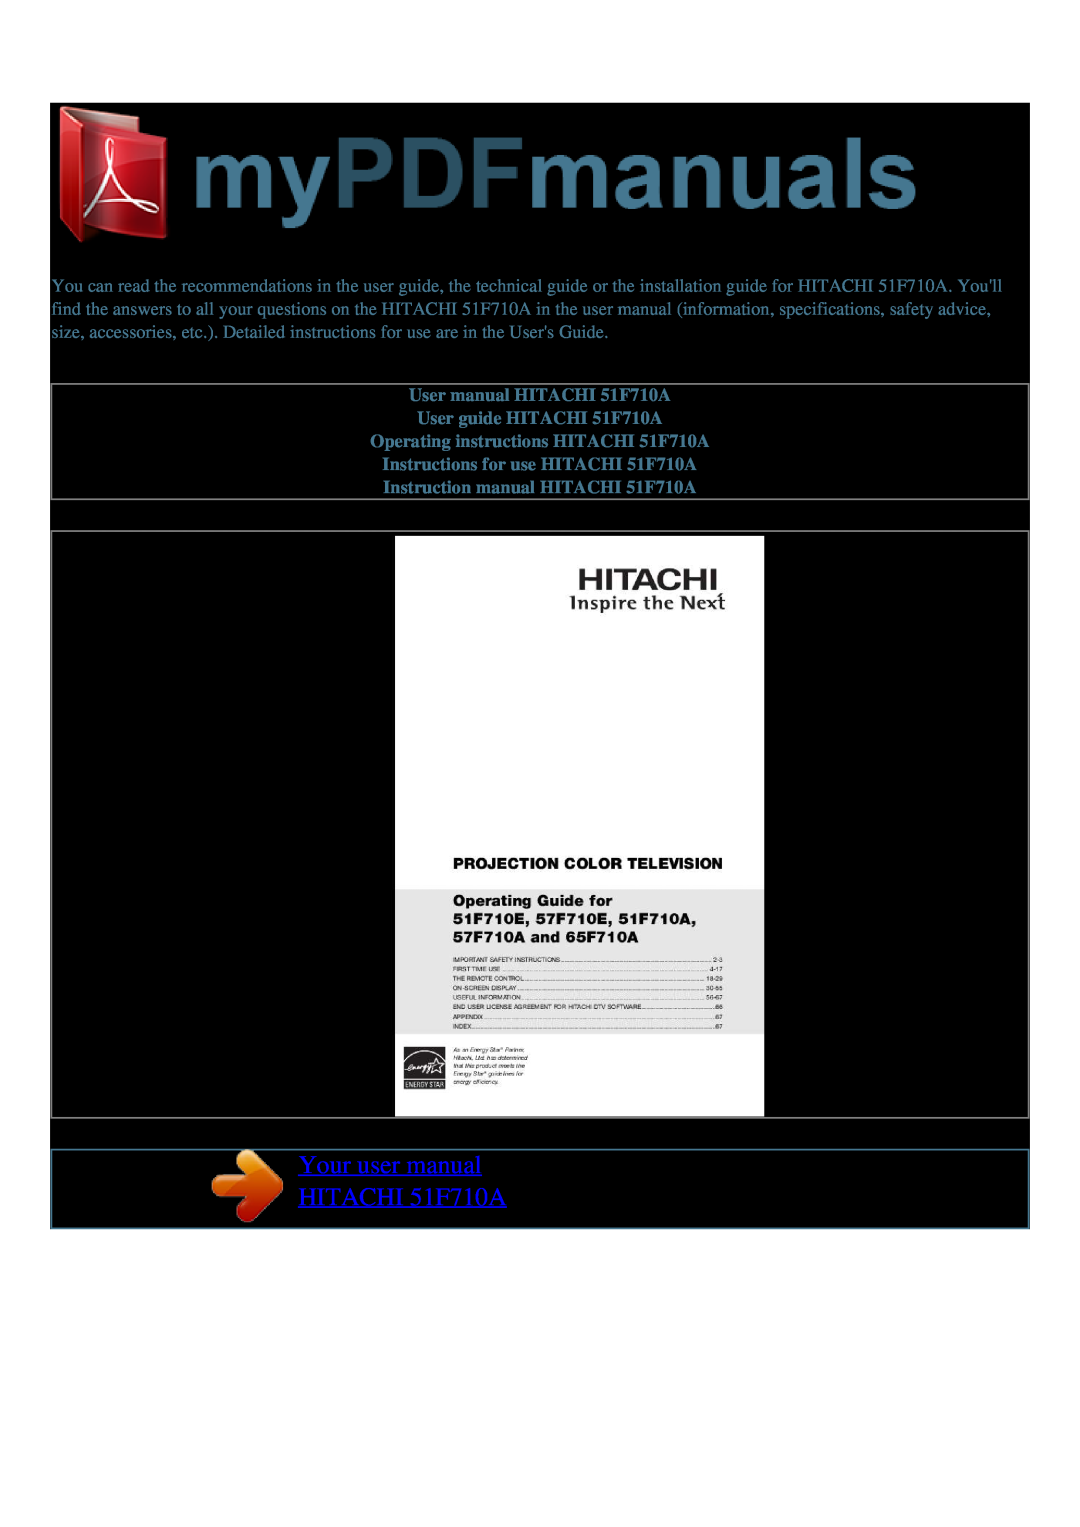 Hitachi 51F710E user manual Your user manual HITACHI 51F710A, User manual HITACHI 51F710A User guide HITACHI 51F710A 